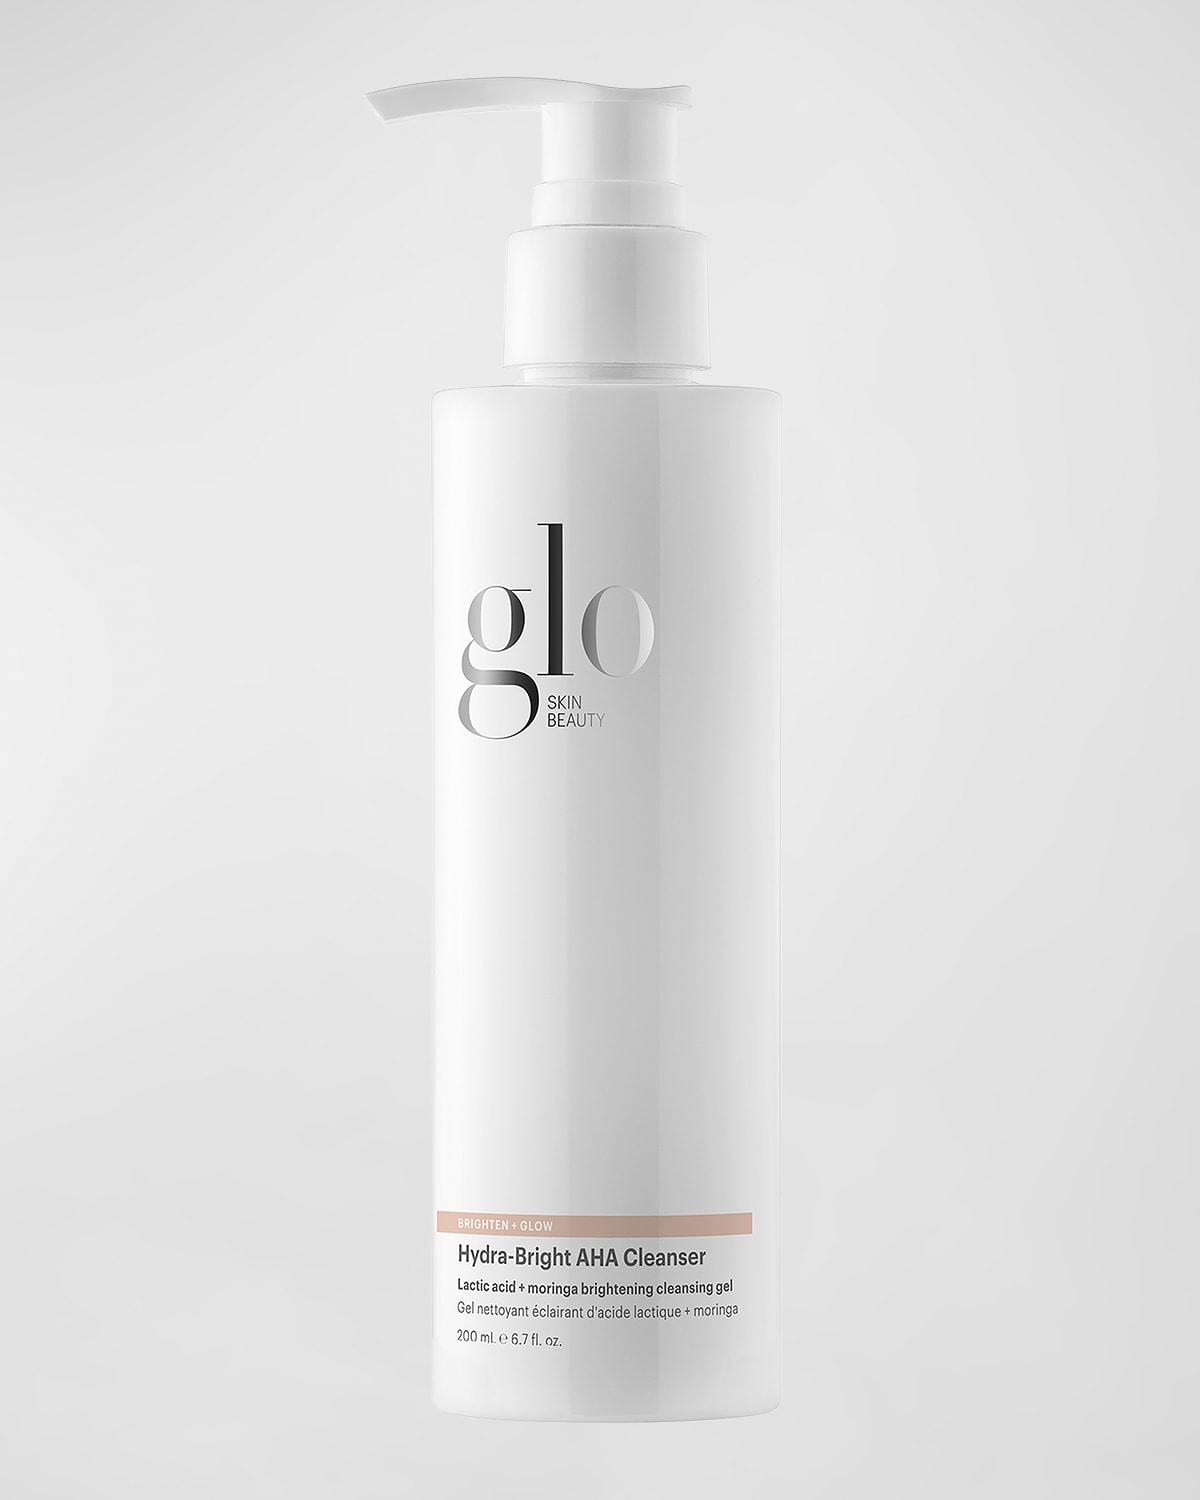 Glo Skin Beauty Hydra-Bright AHA Cleanser, 6.7 oz.